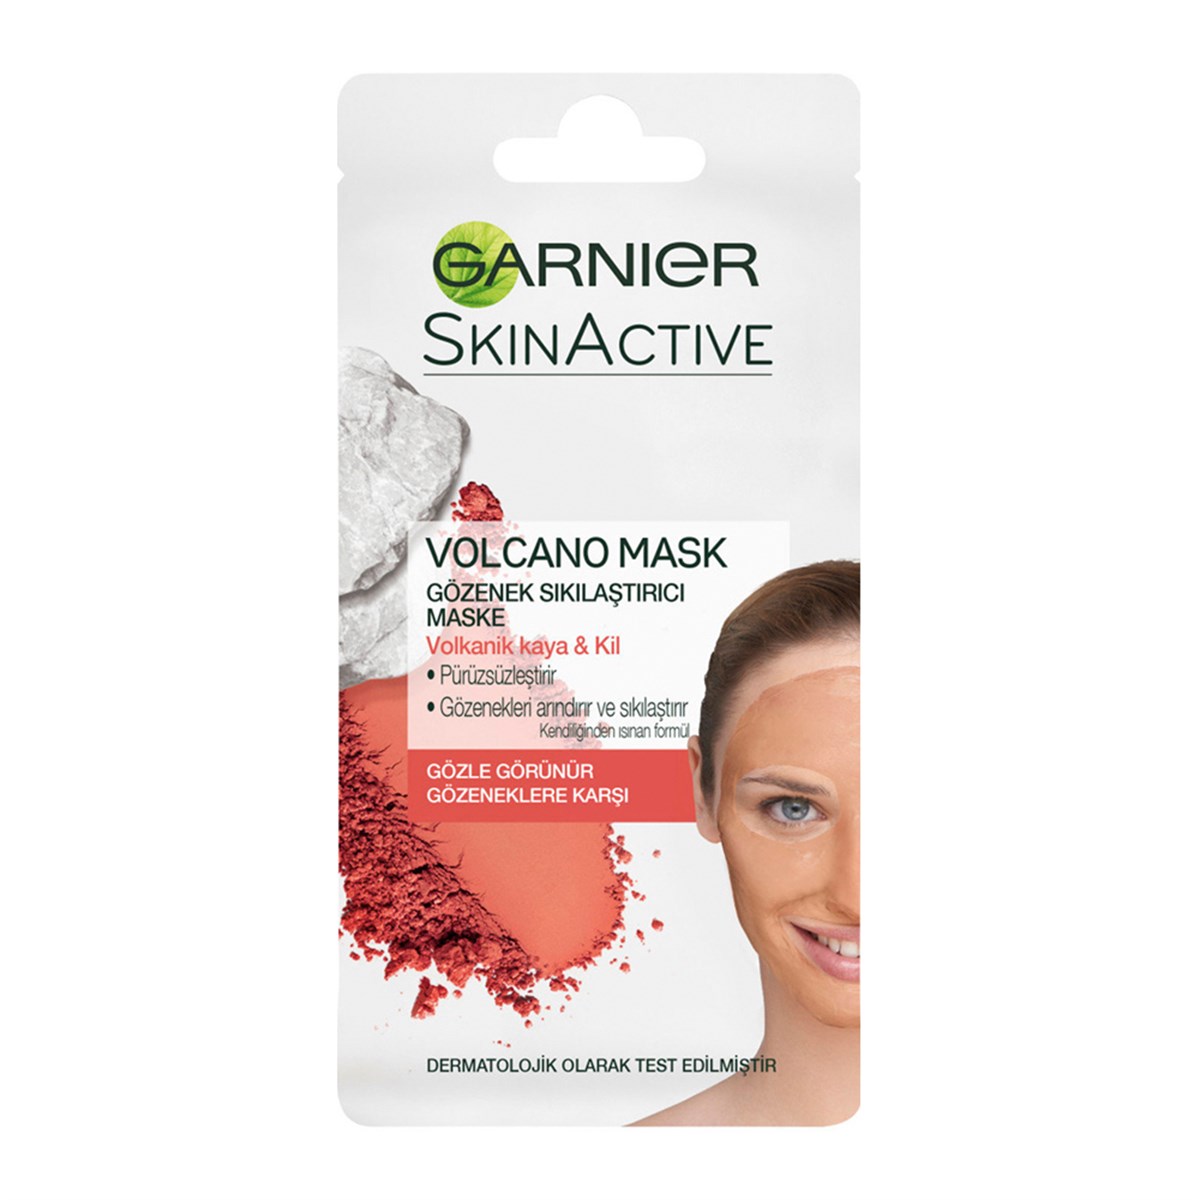 Garnier Skin Active Volcano Mask Gozenek Sikilastirici Maske Platin